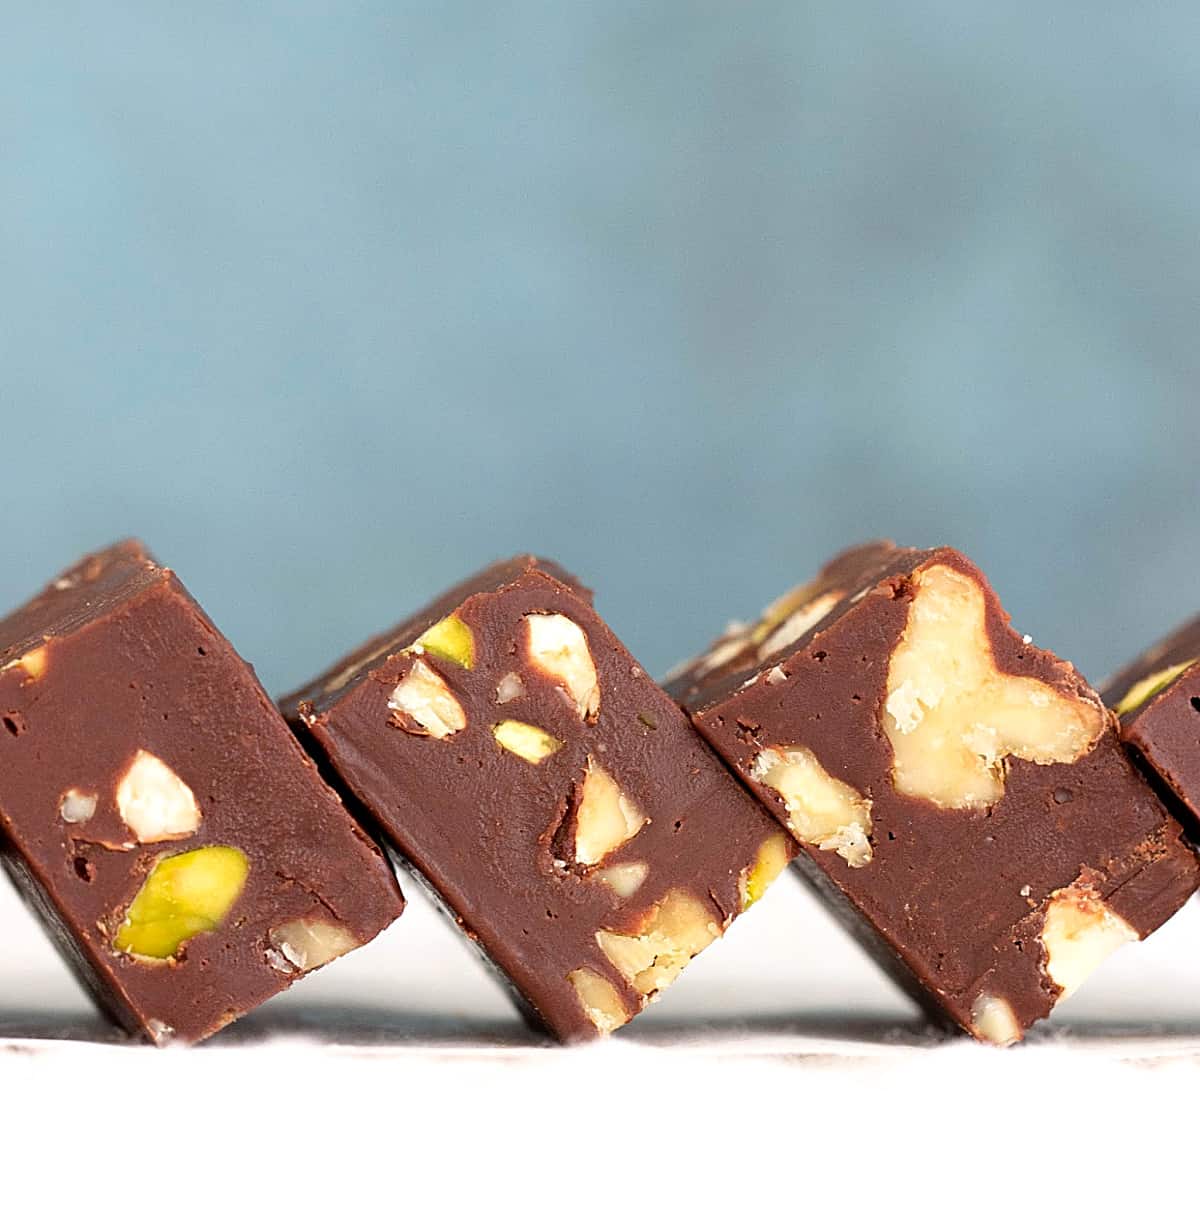 Row of chocolate fudge squares, blue background